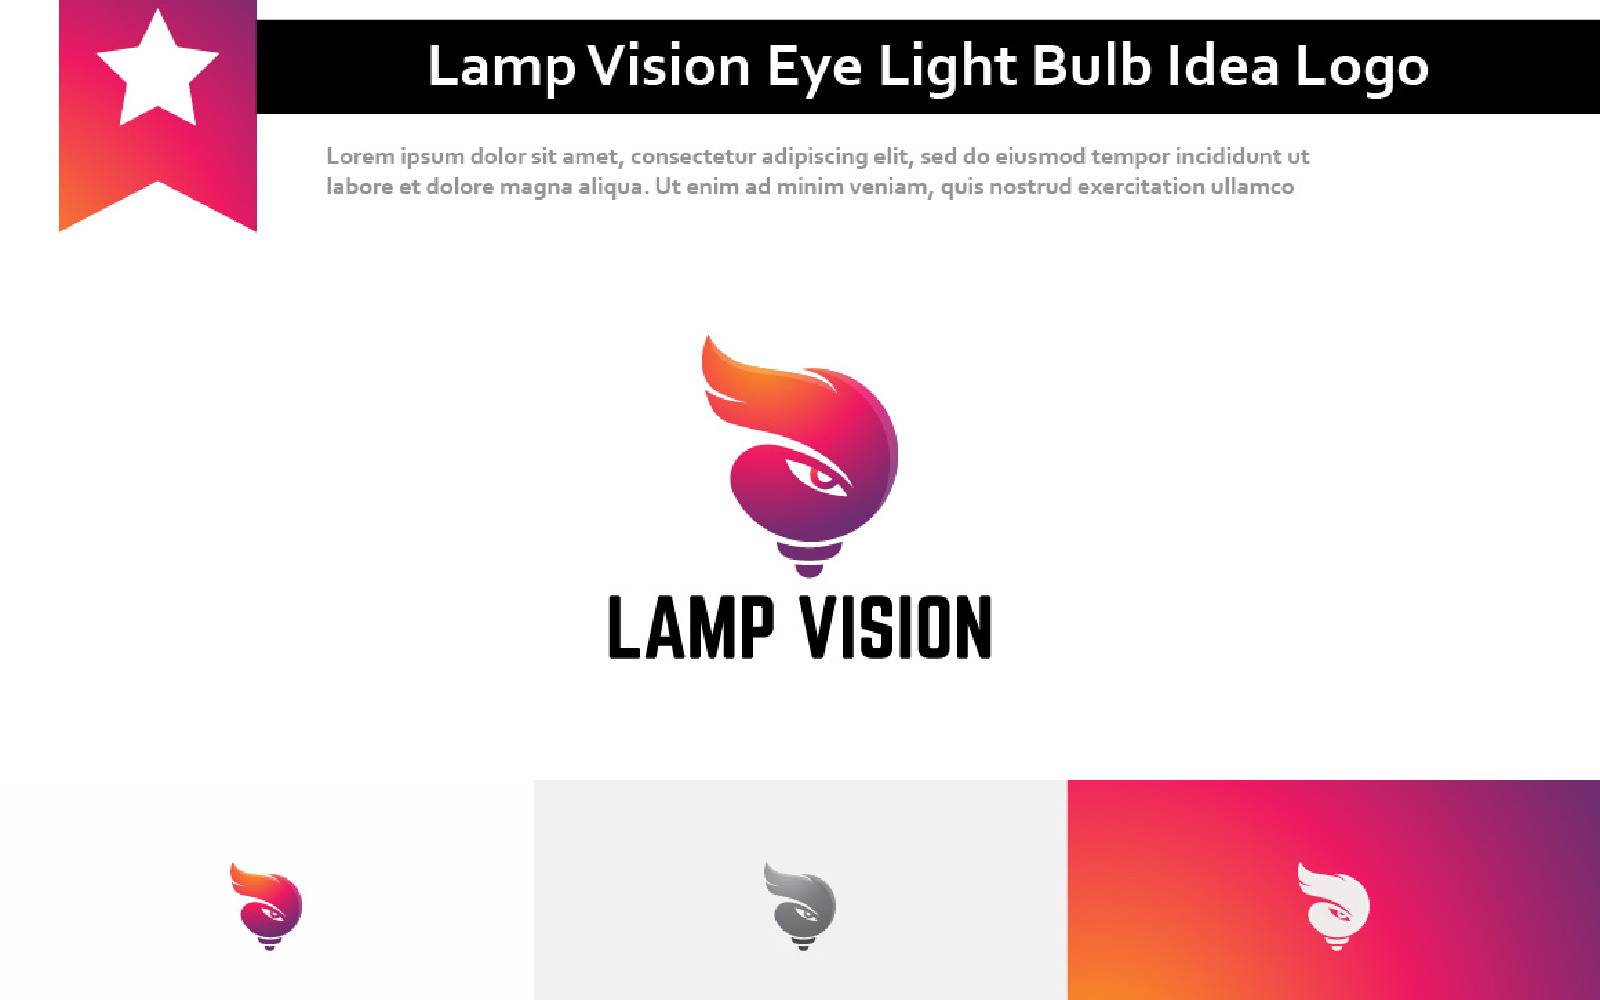 Lamp Vision Eye Light Bulb Idea Logo